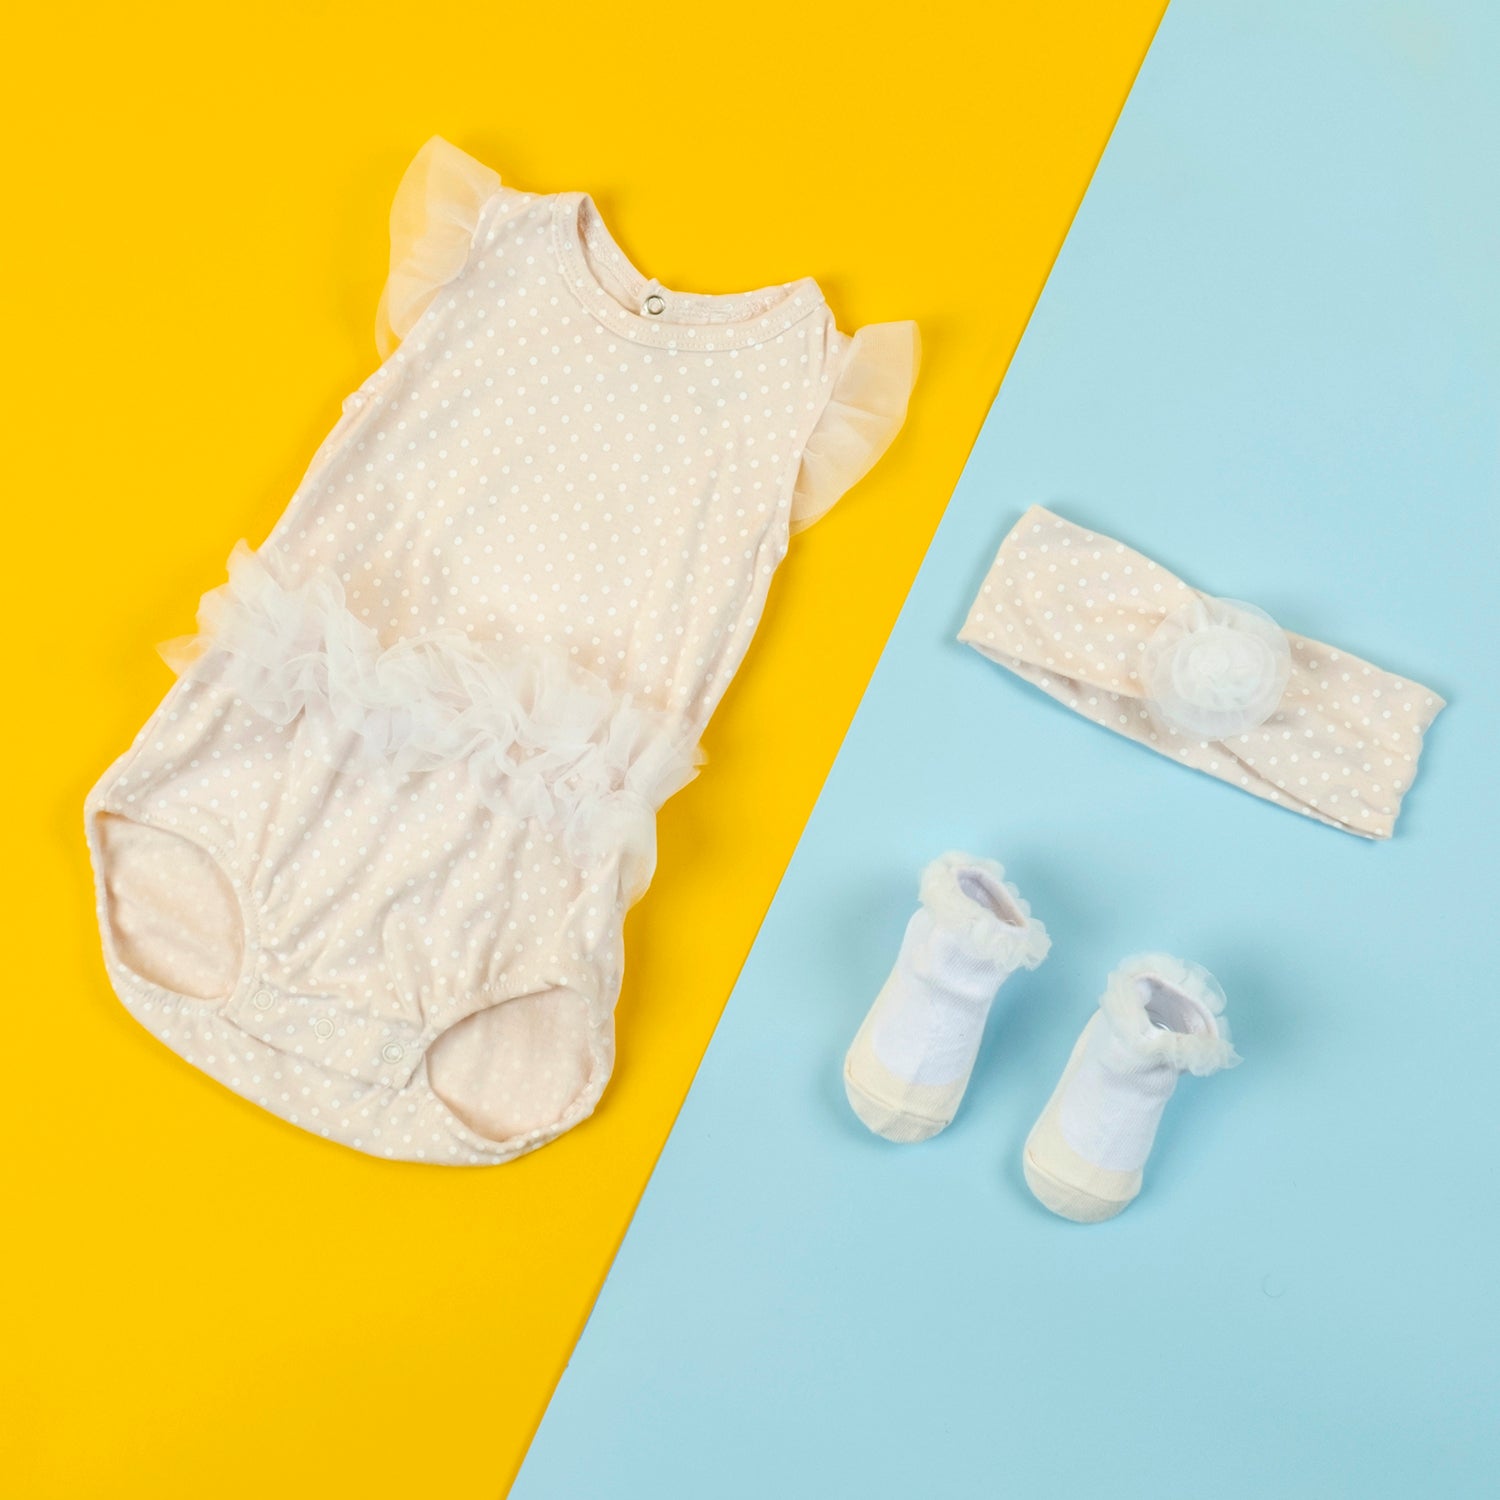 Baby Moo Polka Dotte Gift Set 3 Piece With Bodysuit, Socks And Headband - Cream